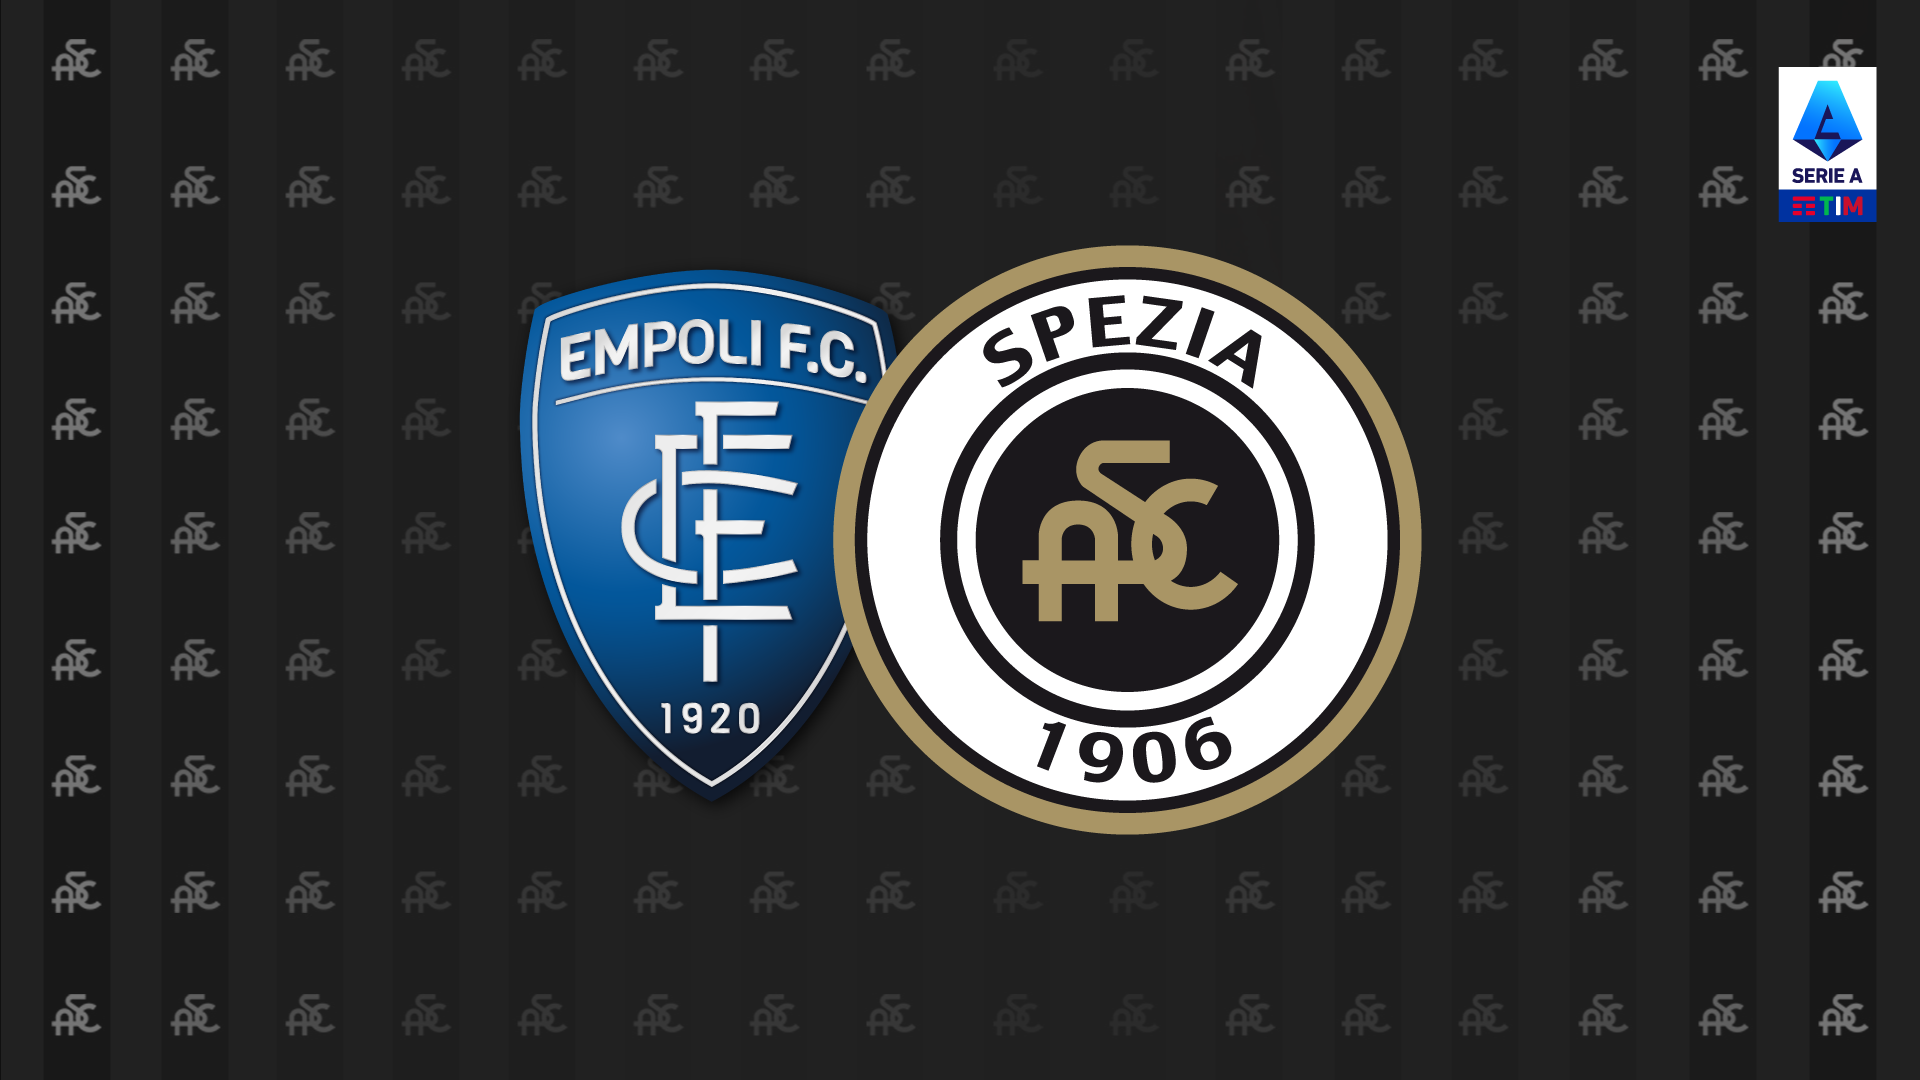 Serie A TIM 21/22: Empoli-Spezia 0-0